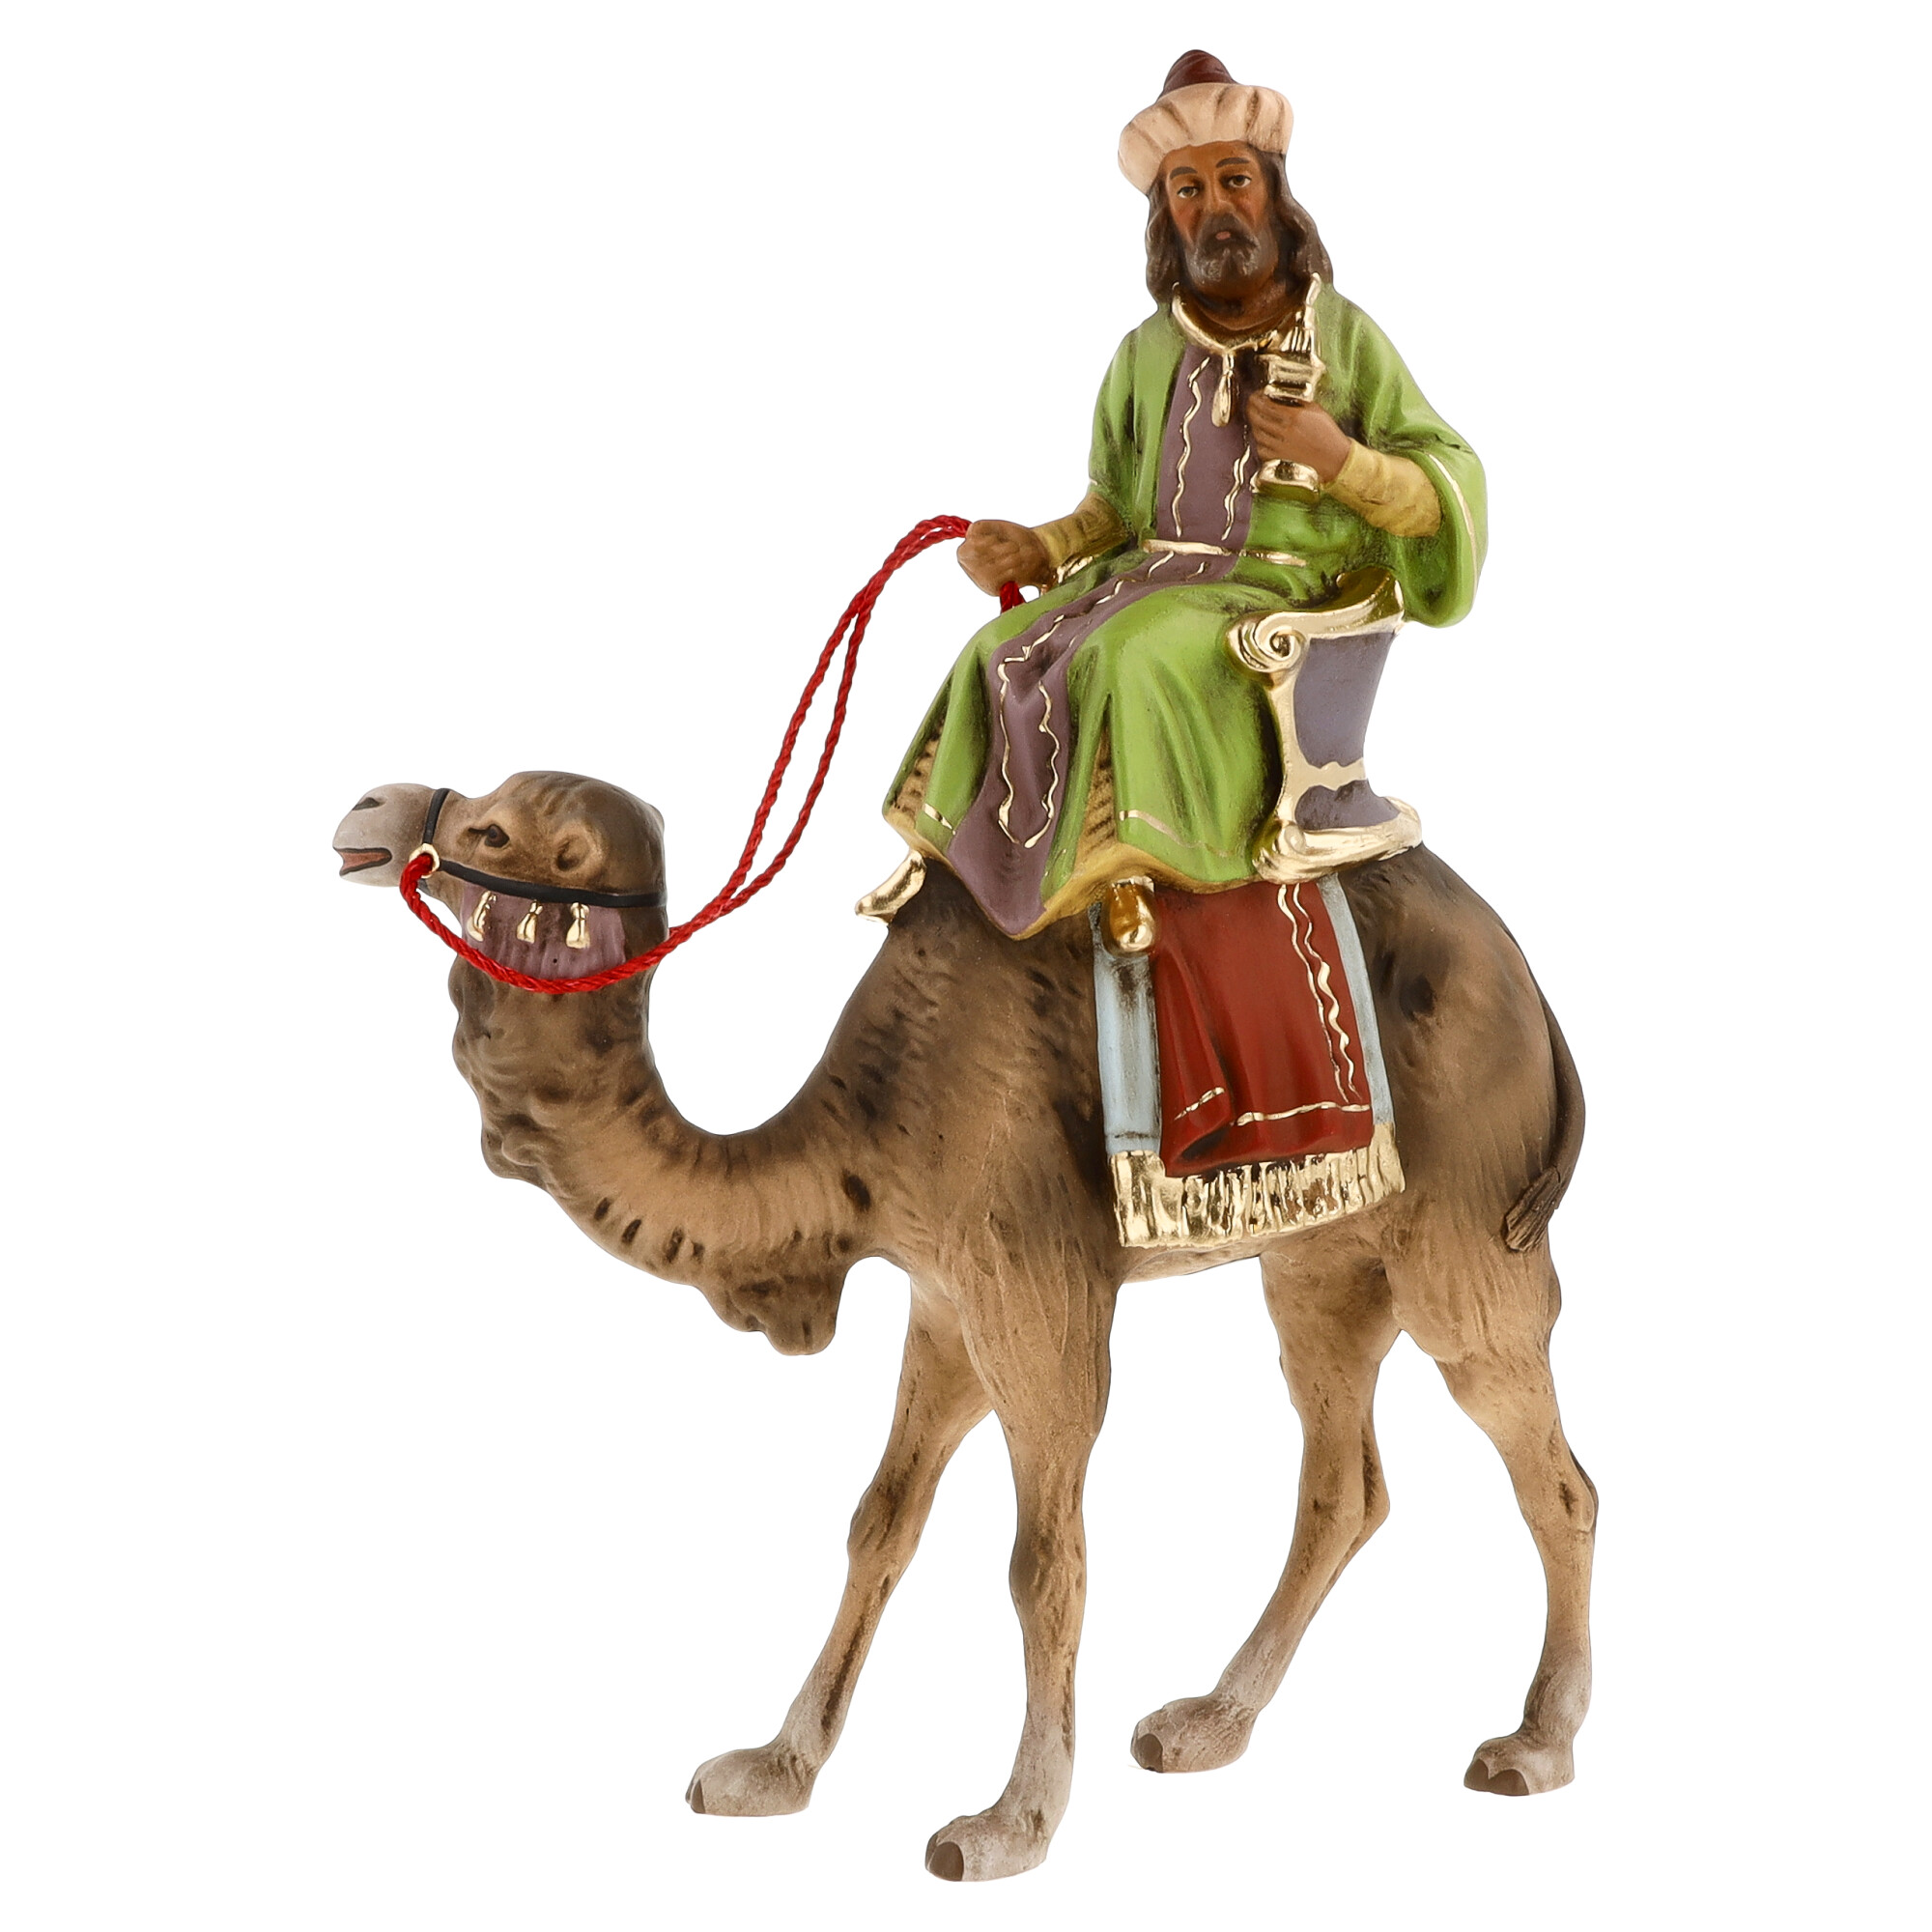 König braun (Melchior) zu Kamel, zu 12cm Figuren